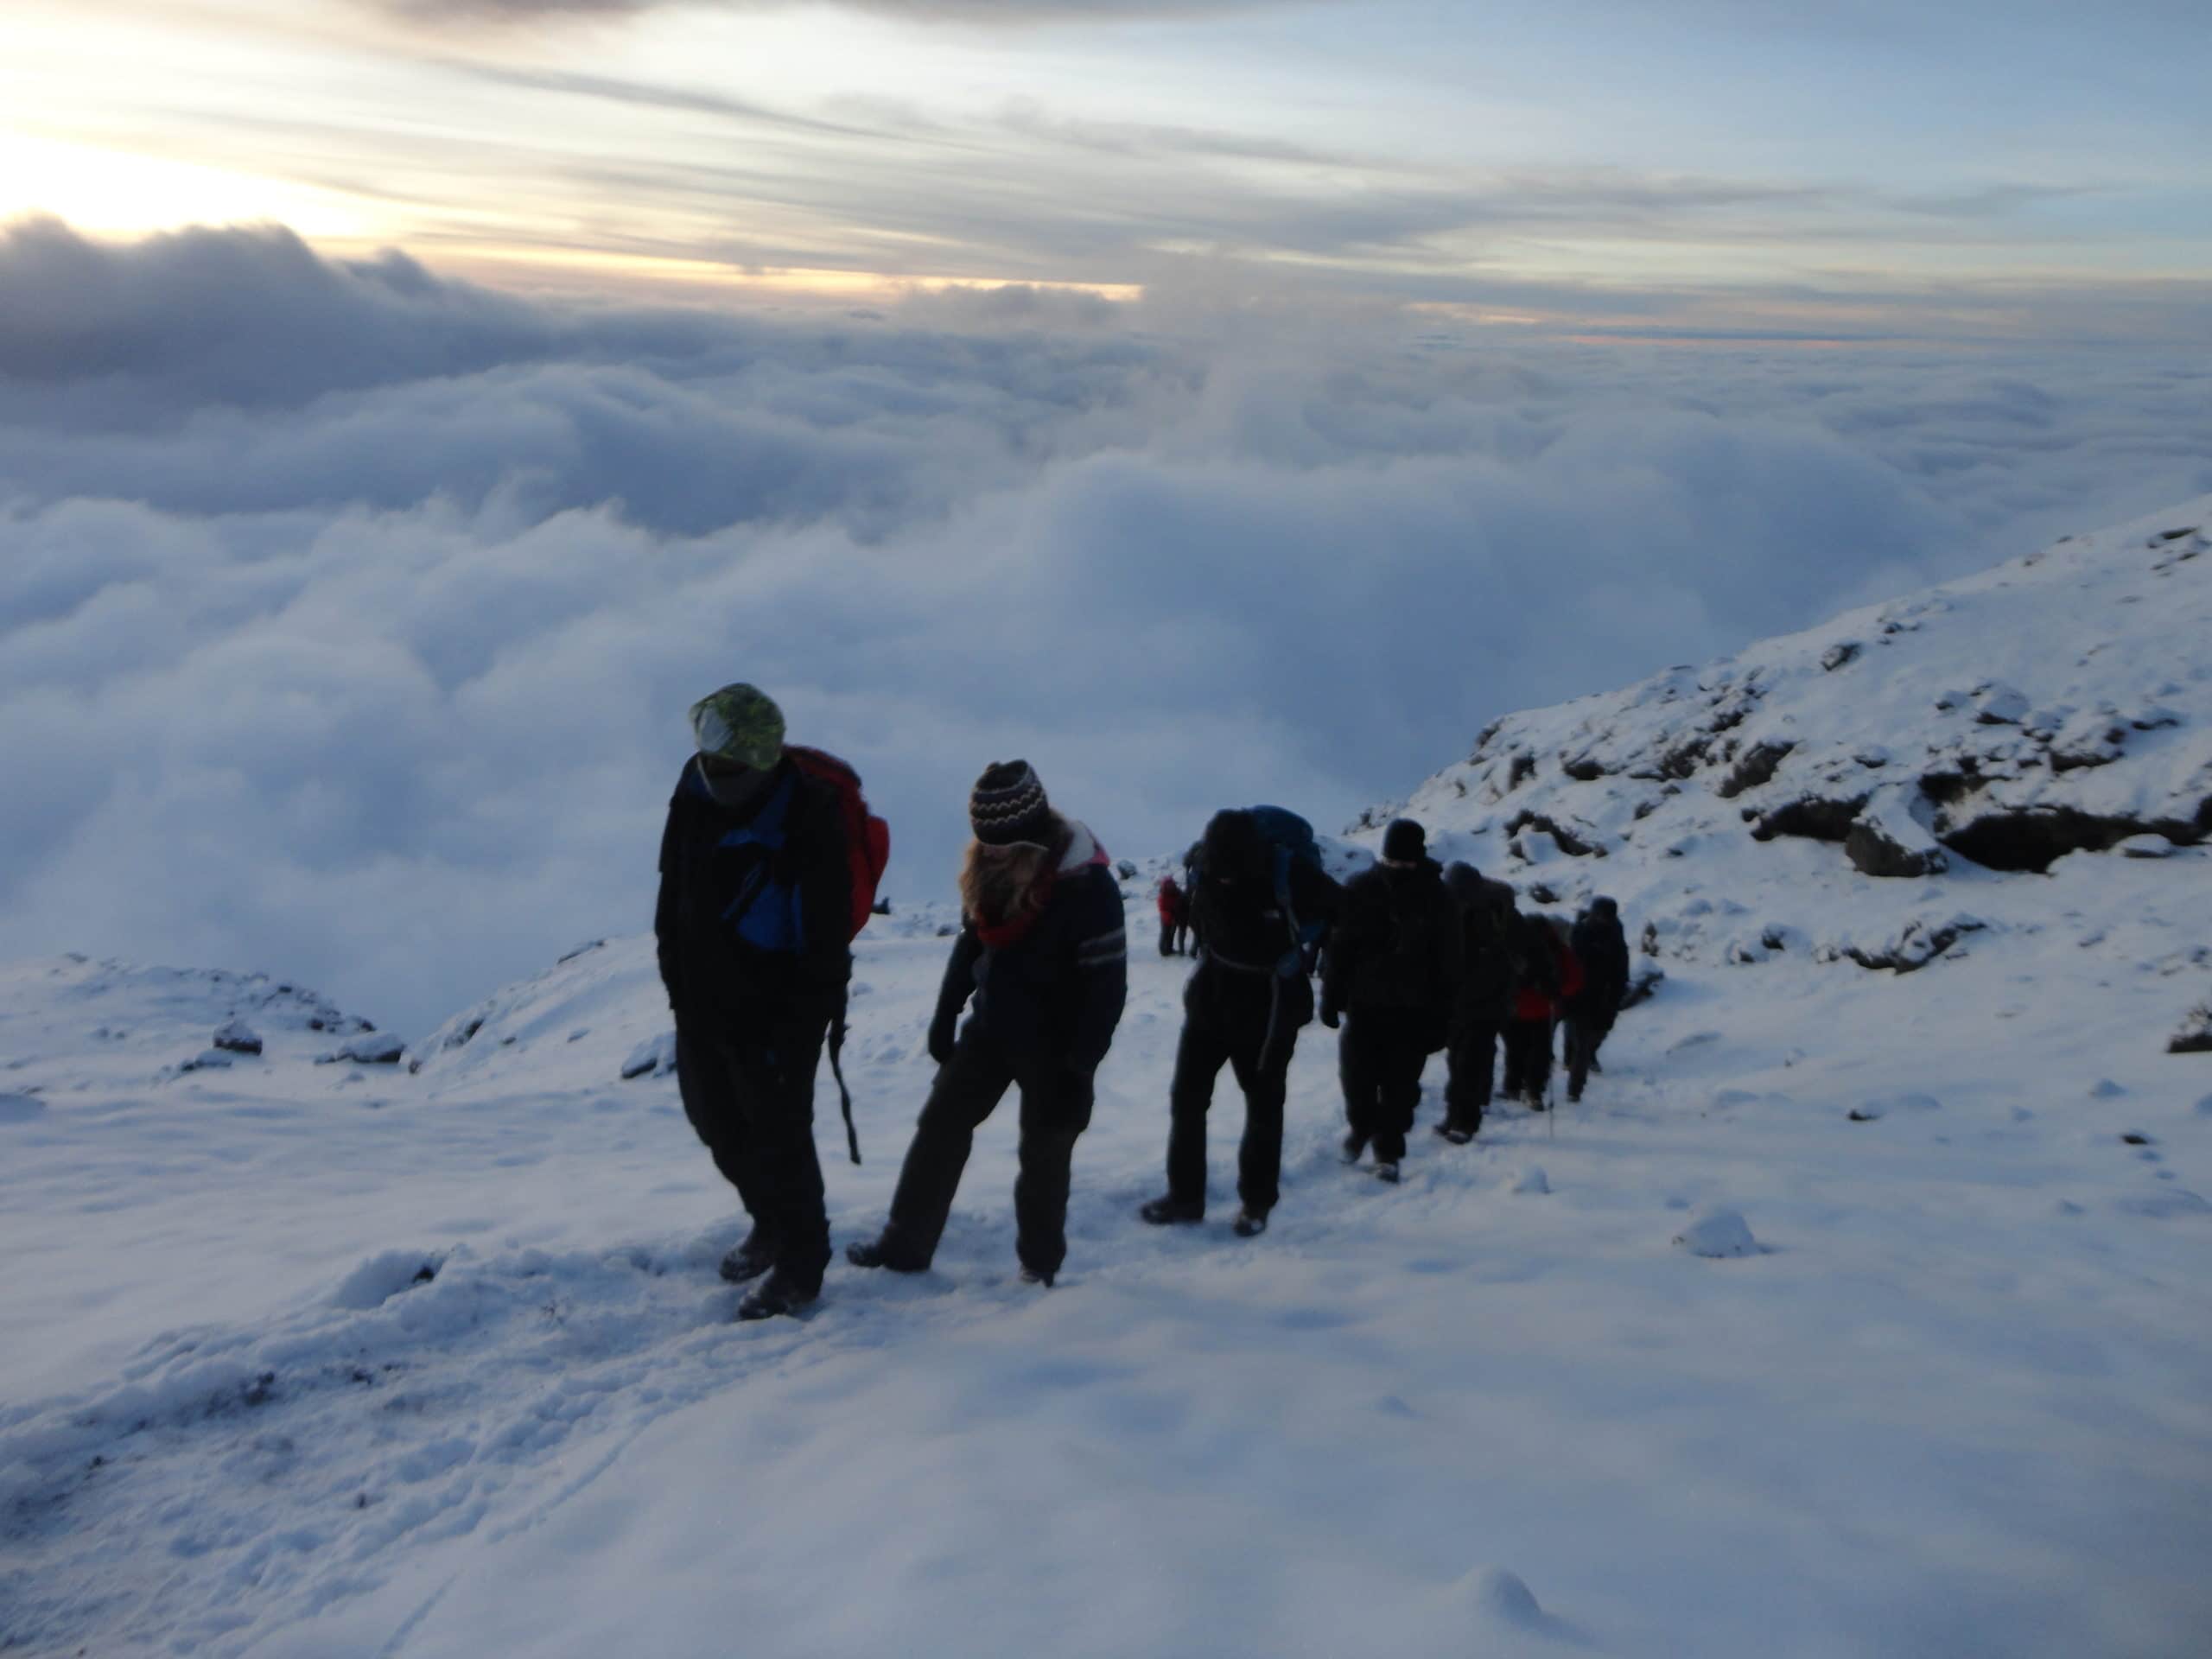 Article on Climbing Kilimanjaro: Best route Best team Best Acclimatization